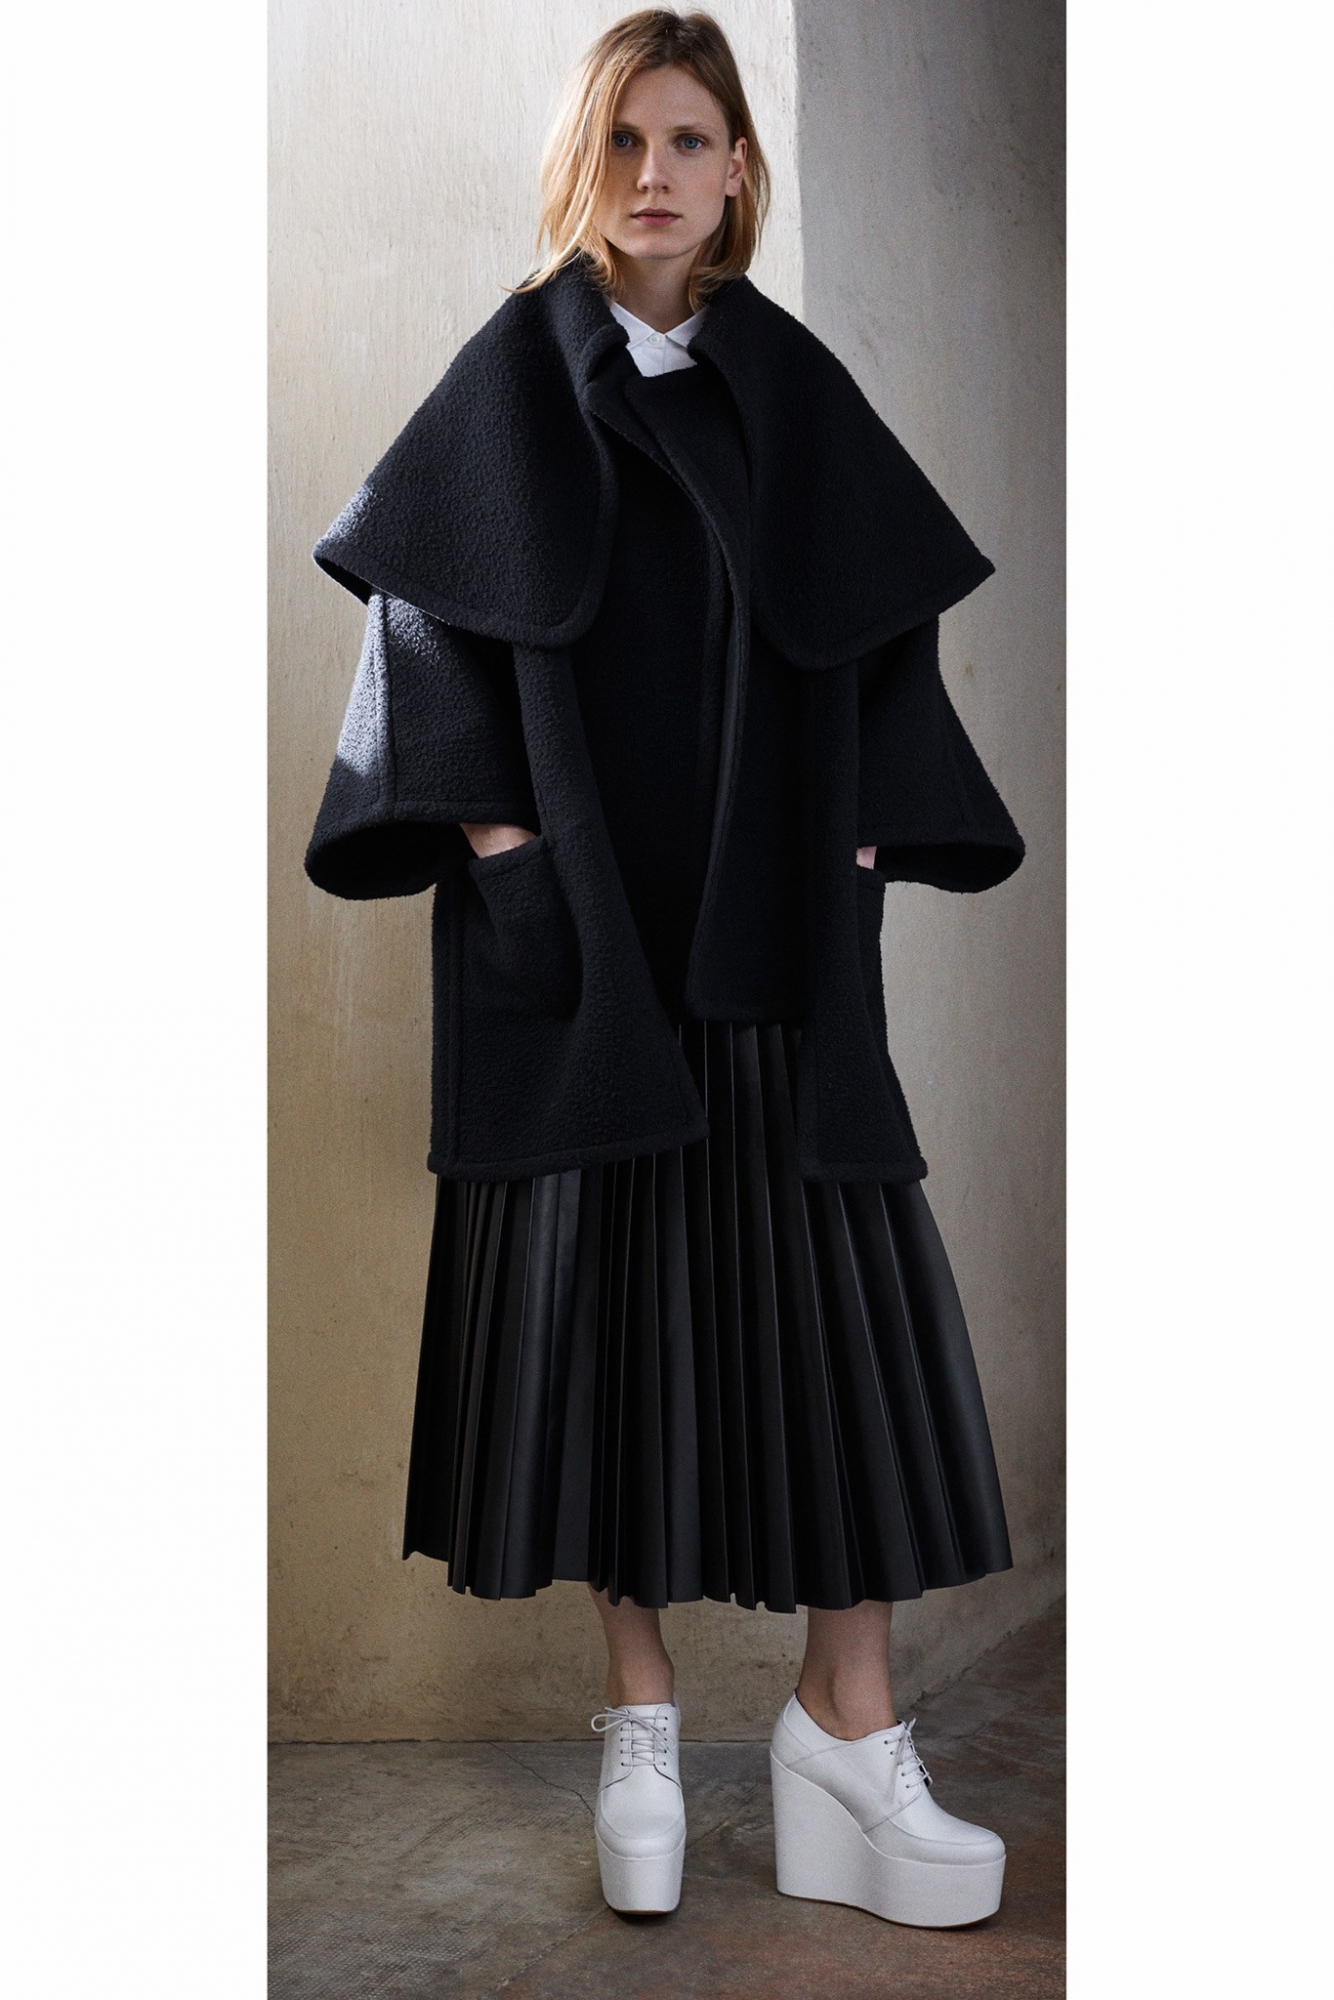 Céline Pre-Fall 2013 Runway Collection Black Wool Cape Coat - Celine ...